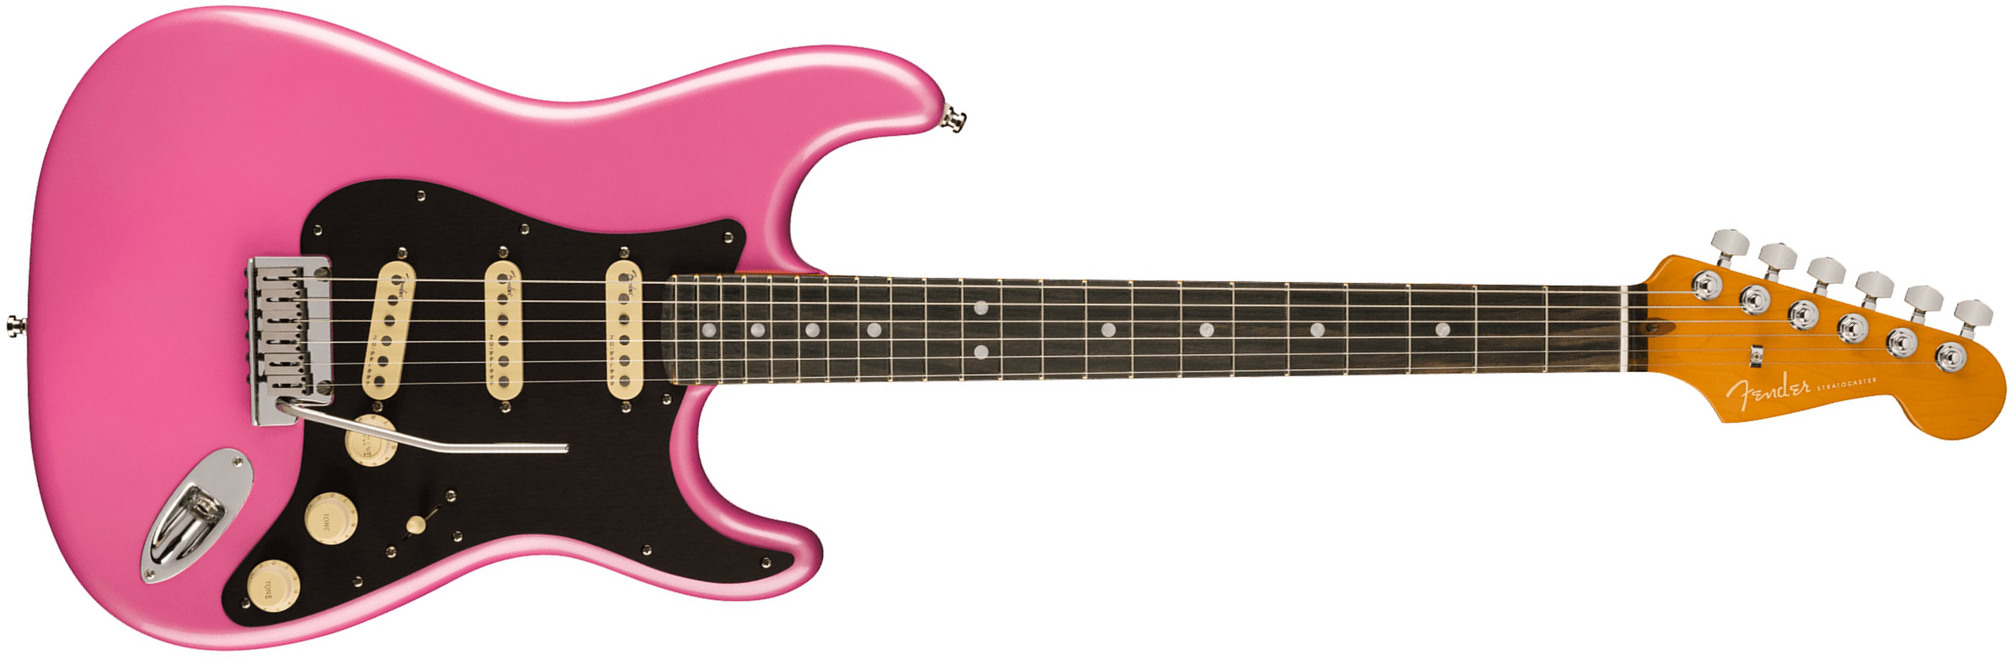 Fender Strat American Ultra Ltd Usa 3s Trem Eb - Bubble Gum Metallic - Elektrische gitaar in Str-vorm - Main picture